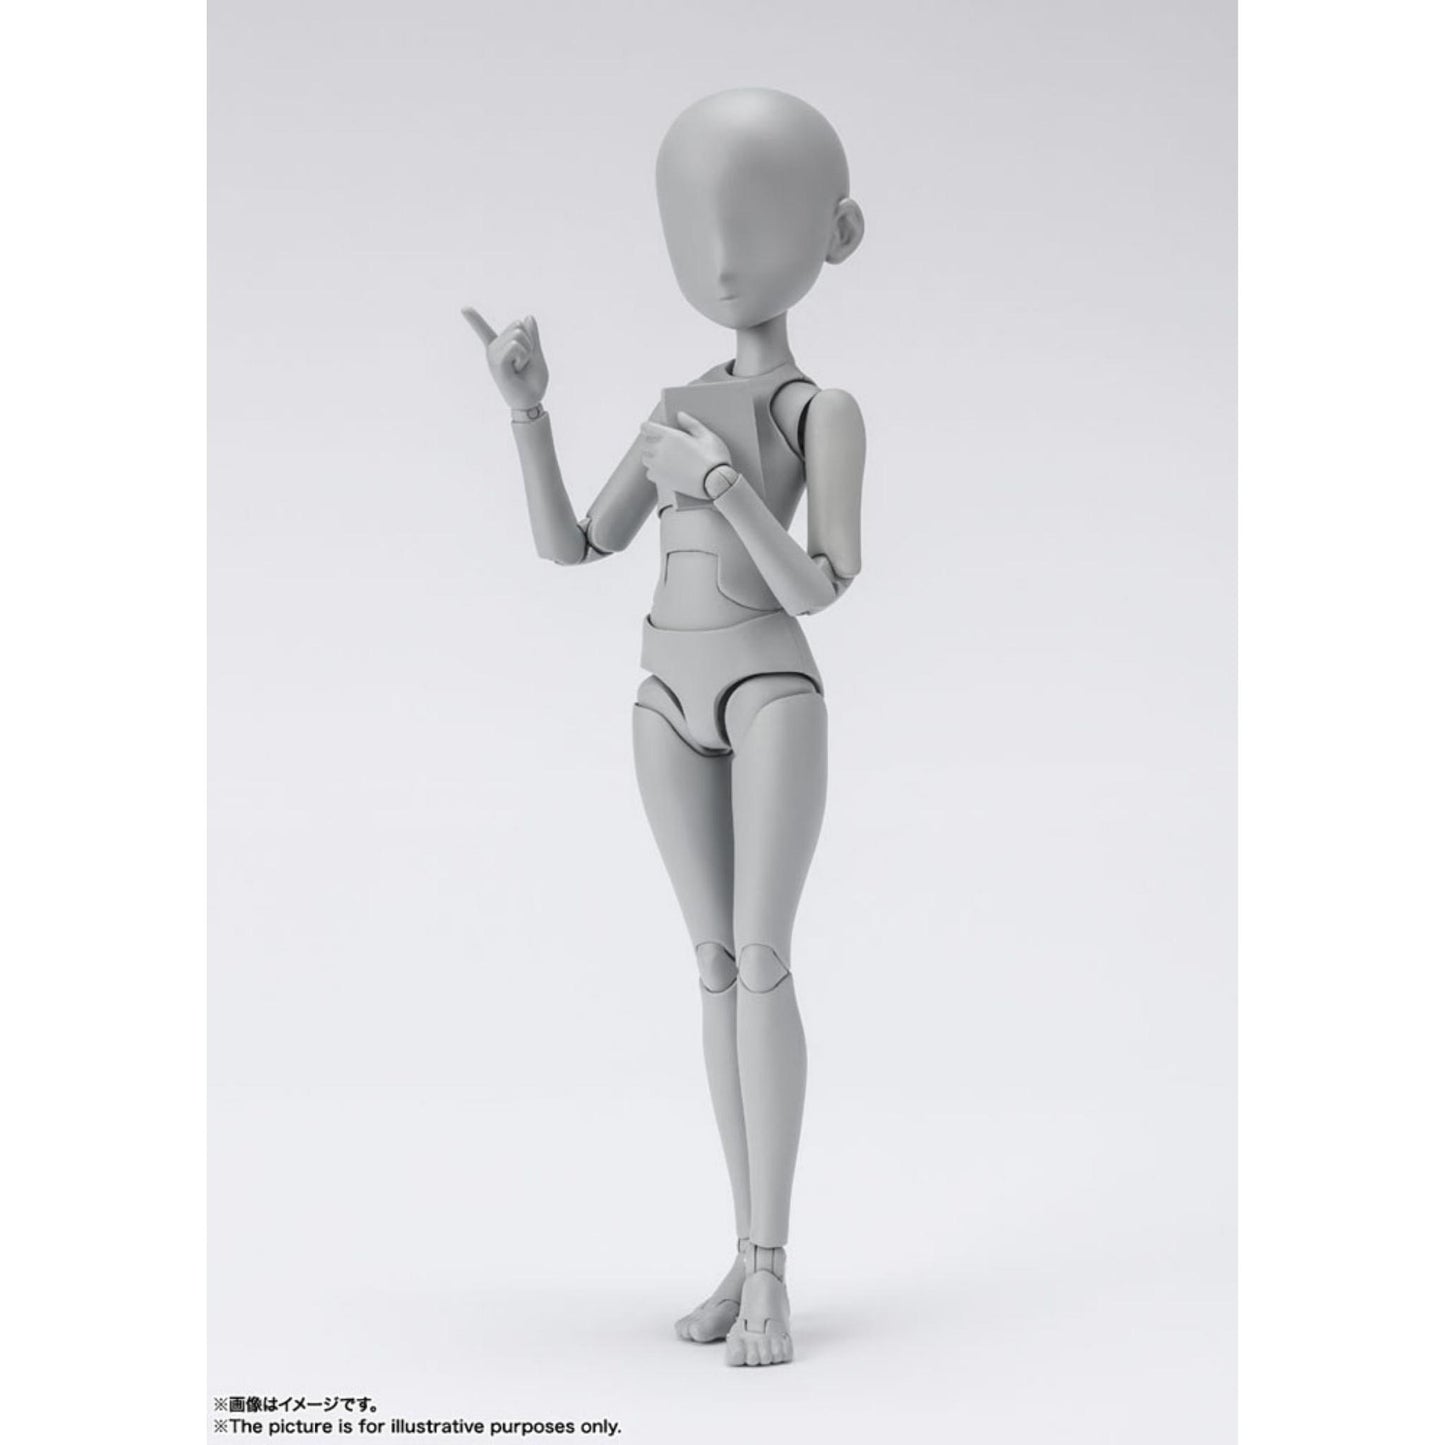 S.H. Figuarts - Body-Chan - Ken Sugimori Edition DX Set (Gray Color Ver.) 13 cm